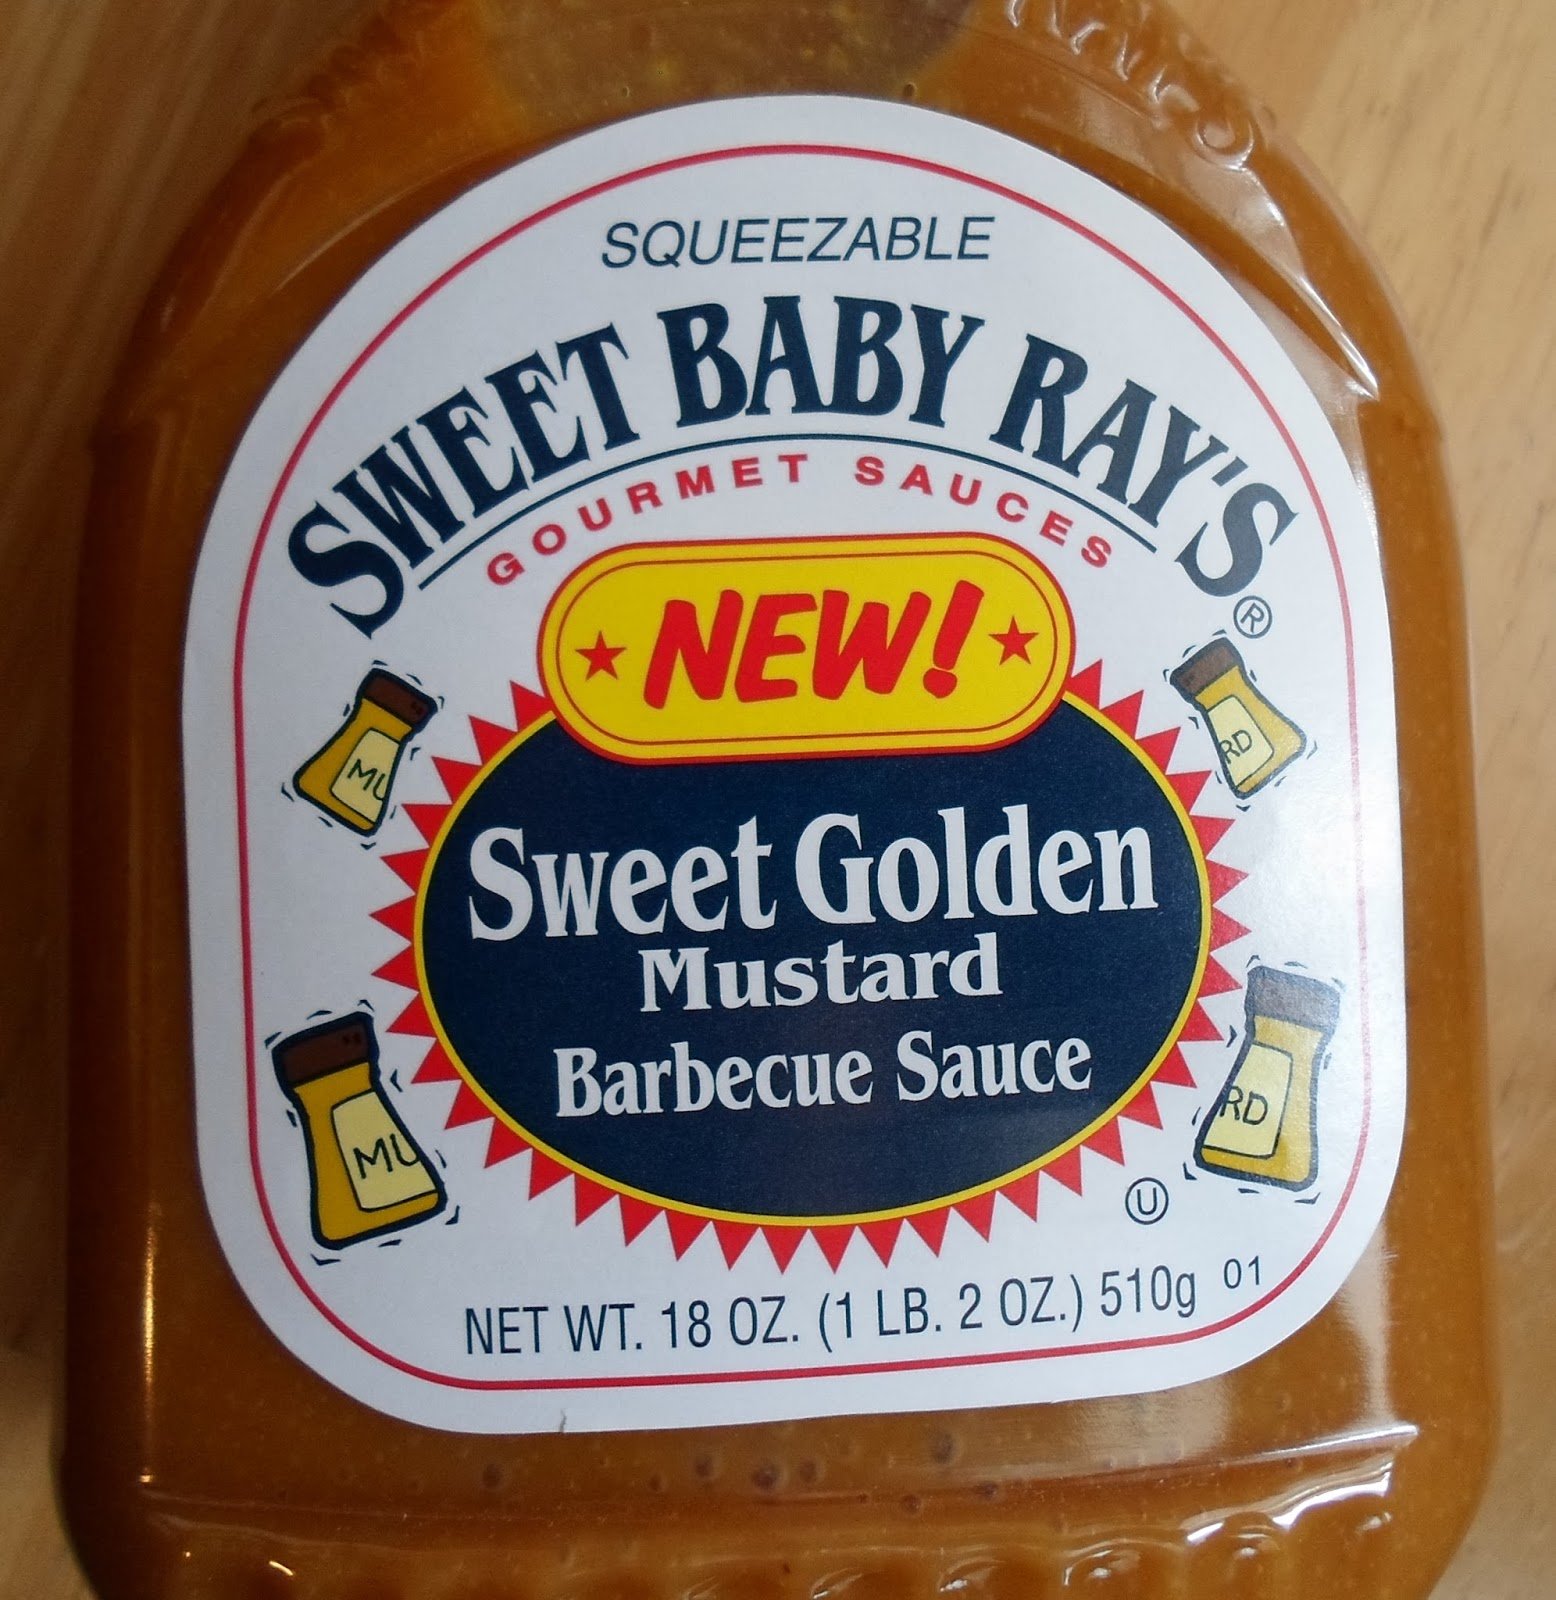 Sweet baby rays golden mustard bbq sauce recipe ...